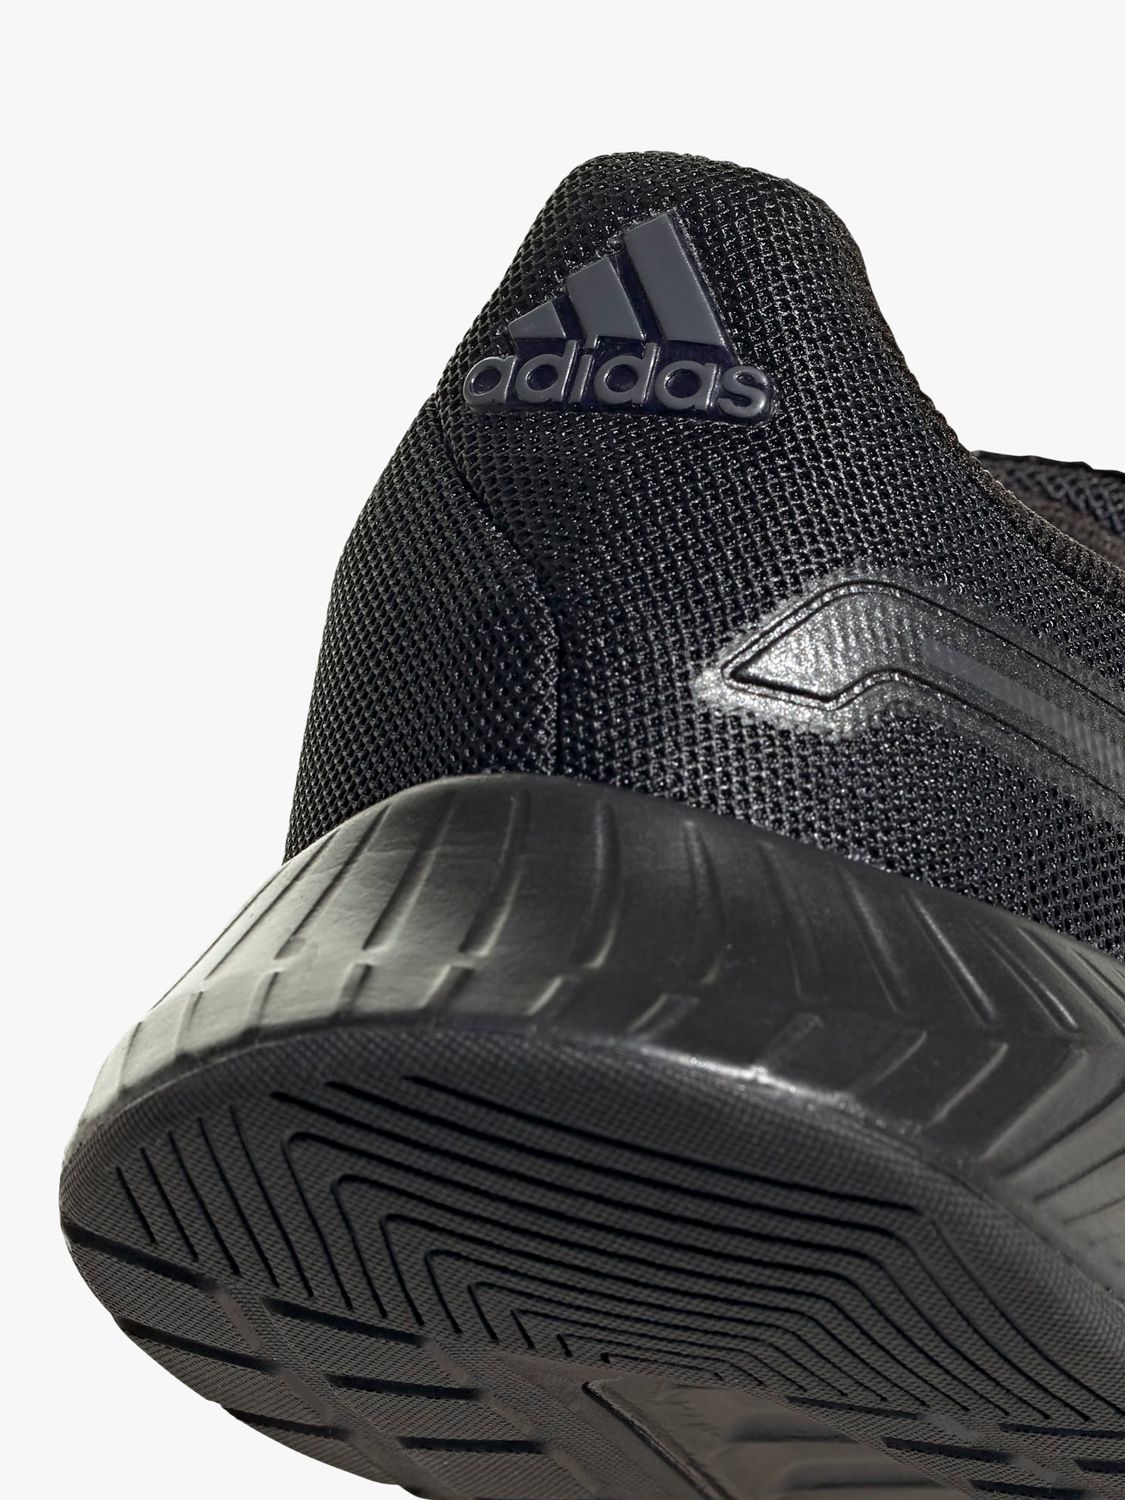 adidas Runfalcon Running Shoes, Black/Grey Six at John Lewis & Partners